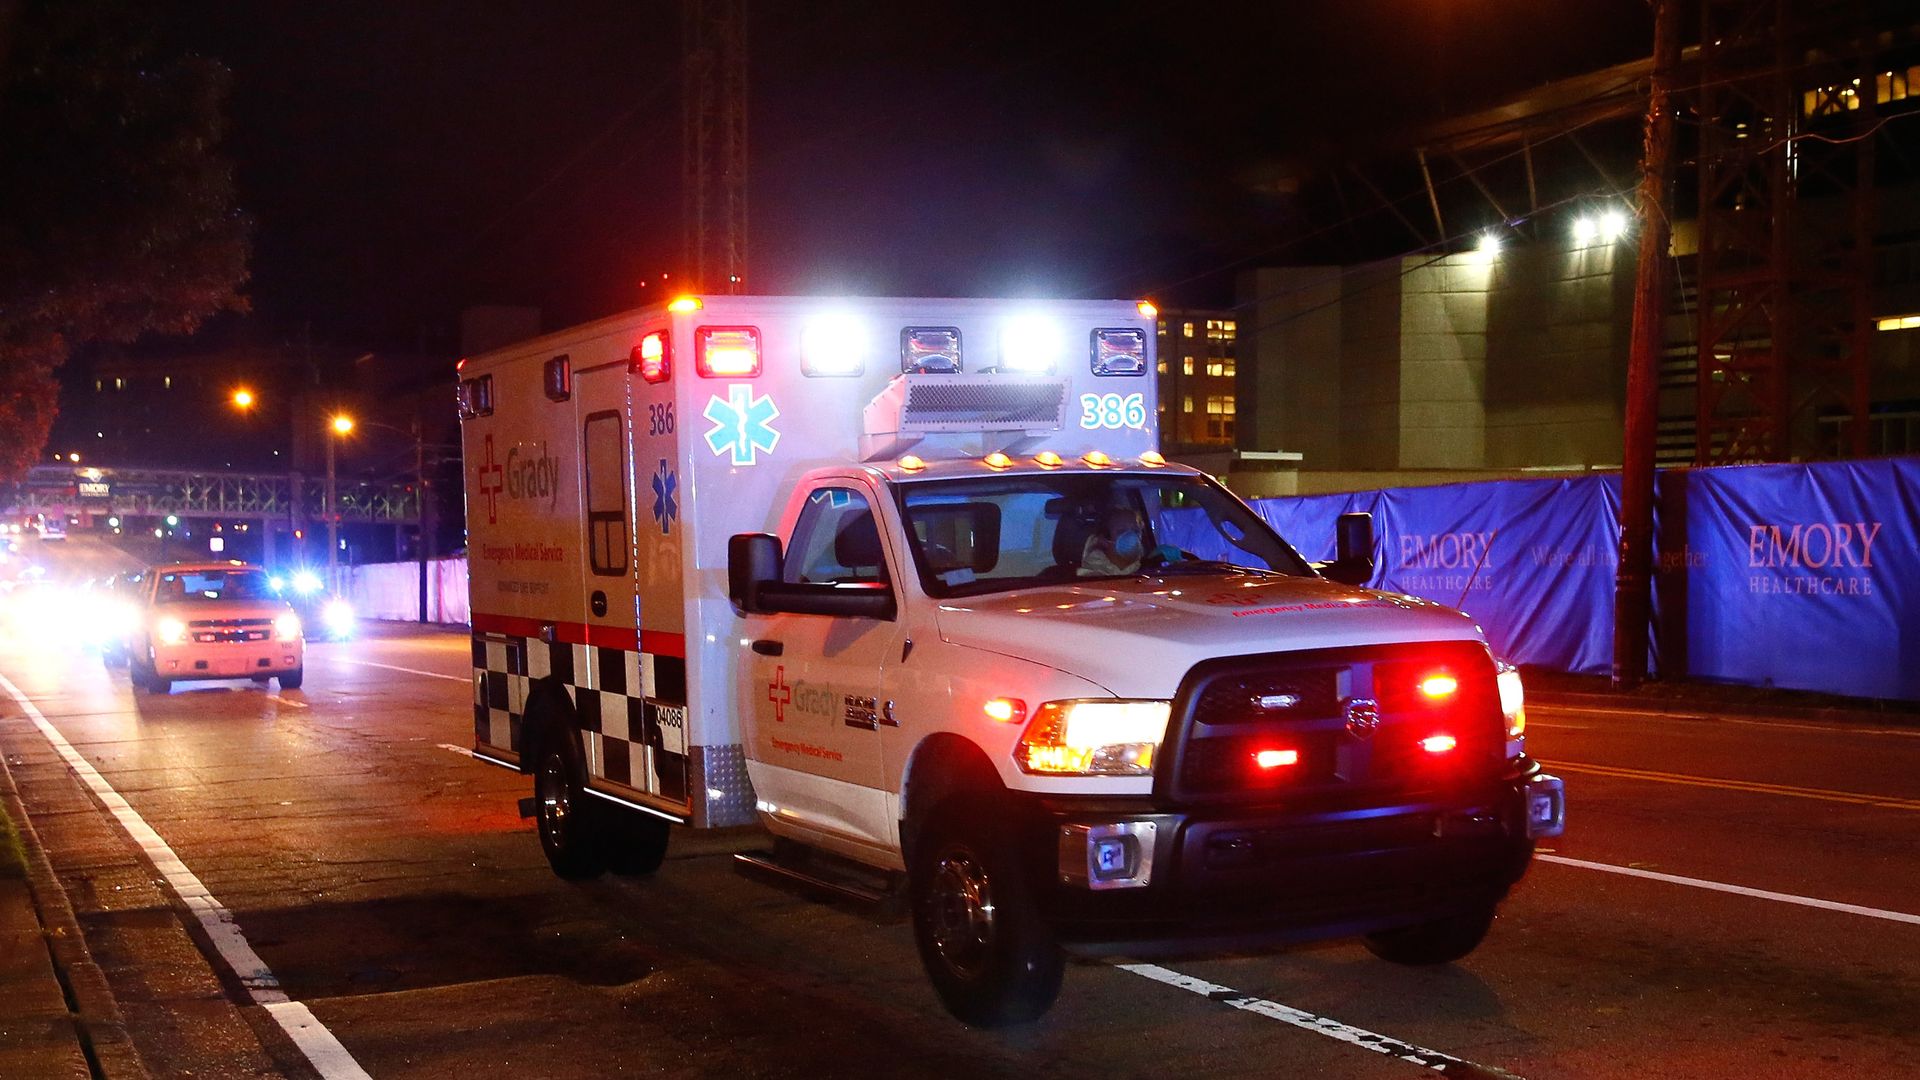 An ambulance with lights flashing.